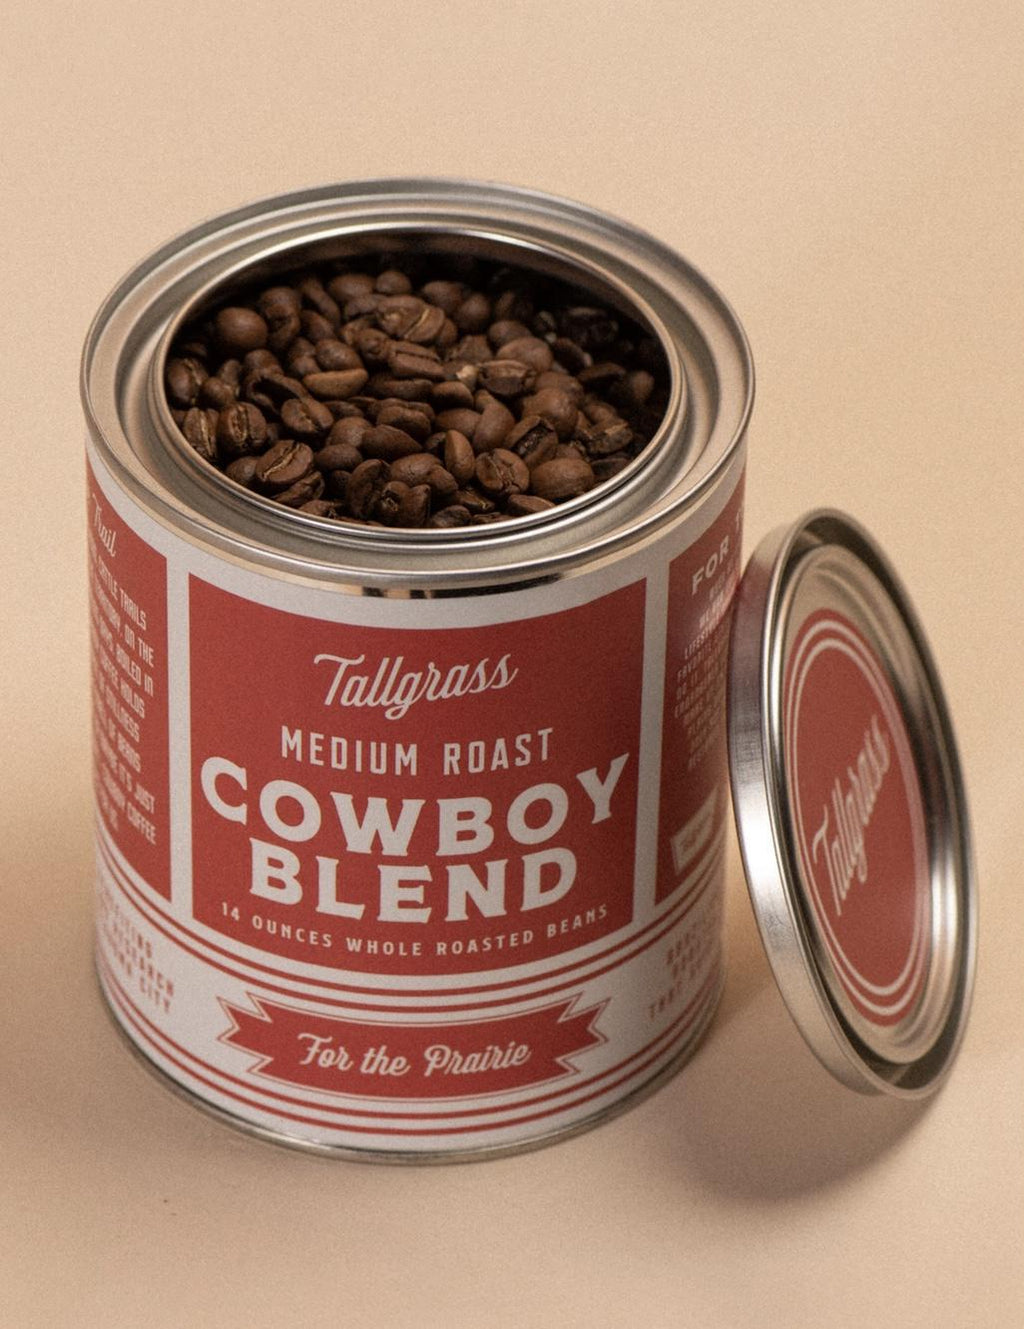 Tallgrass Cowboy Blend 14oz Whole Roasted Beans